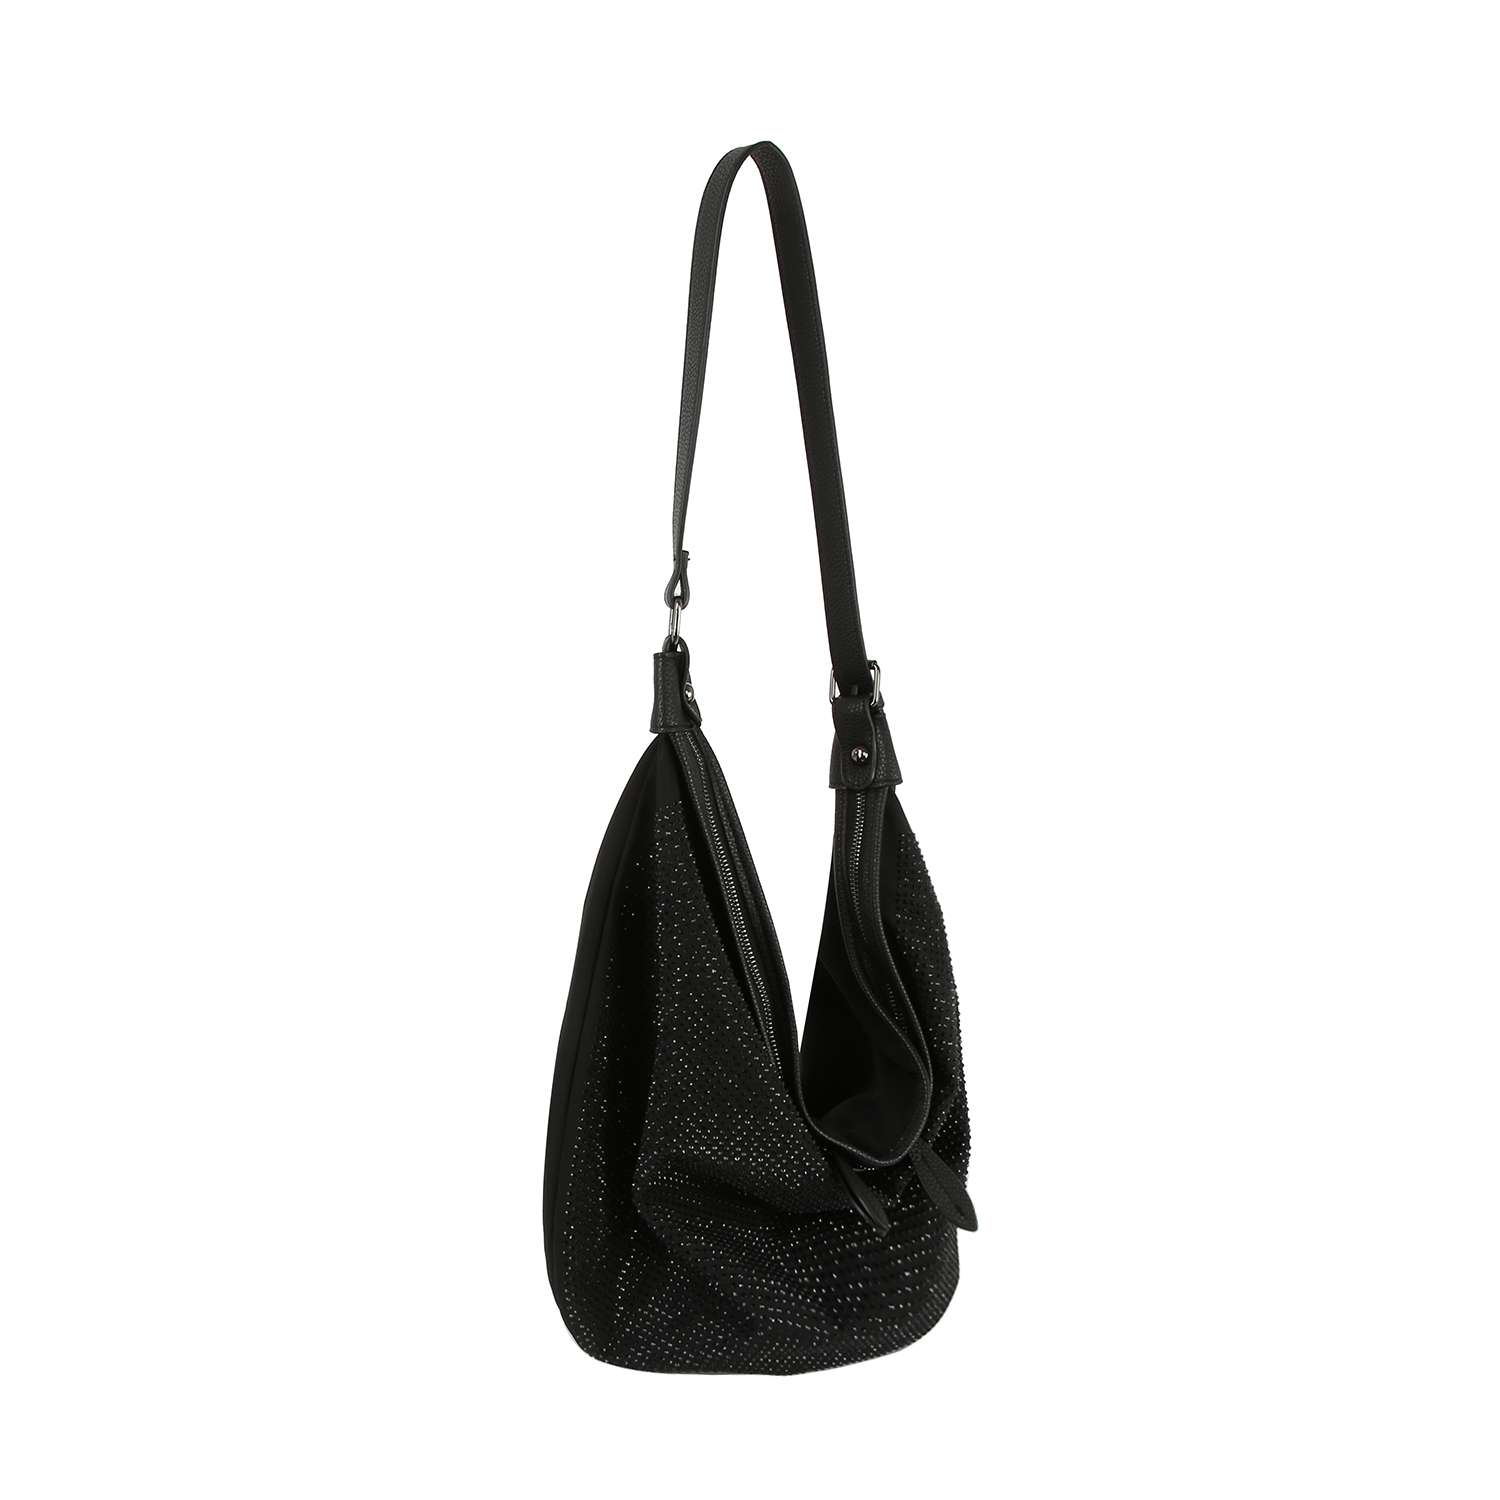 Dazzling Rhinestone Hobo Handbag: Black - Coco and lulu boutique 